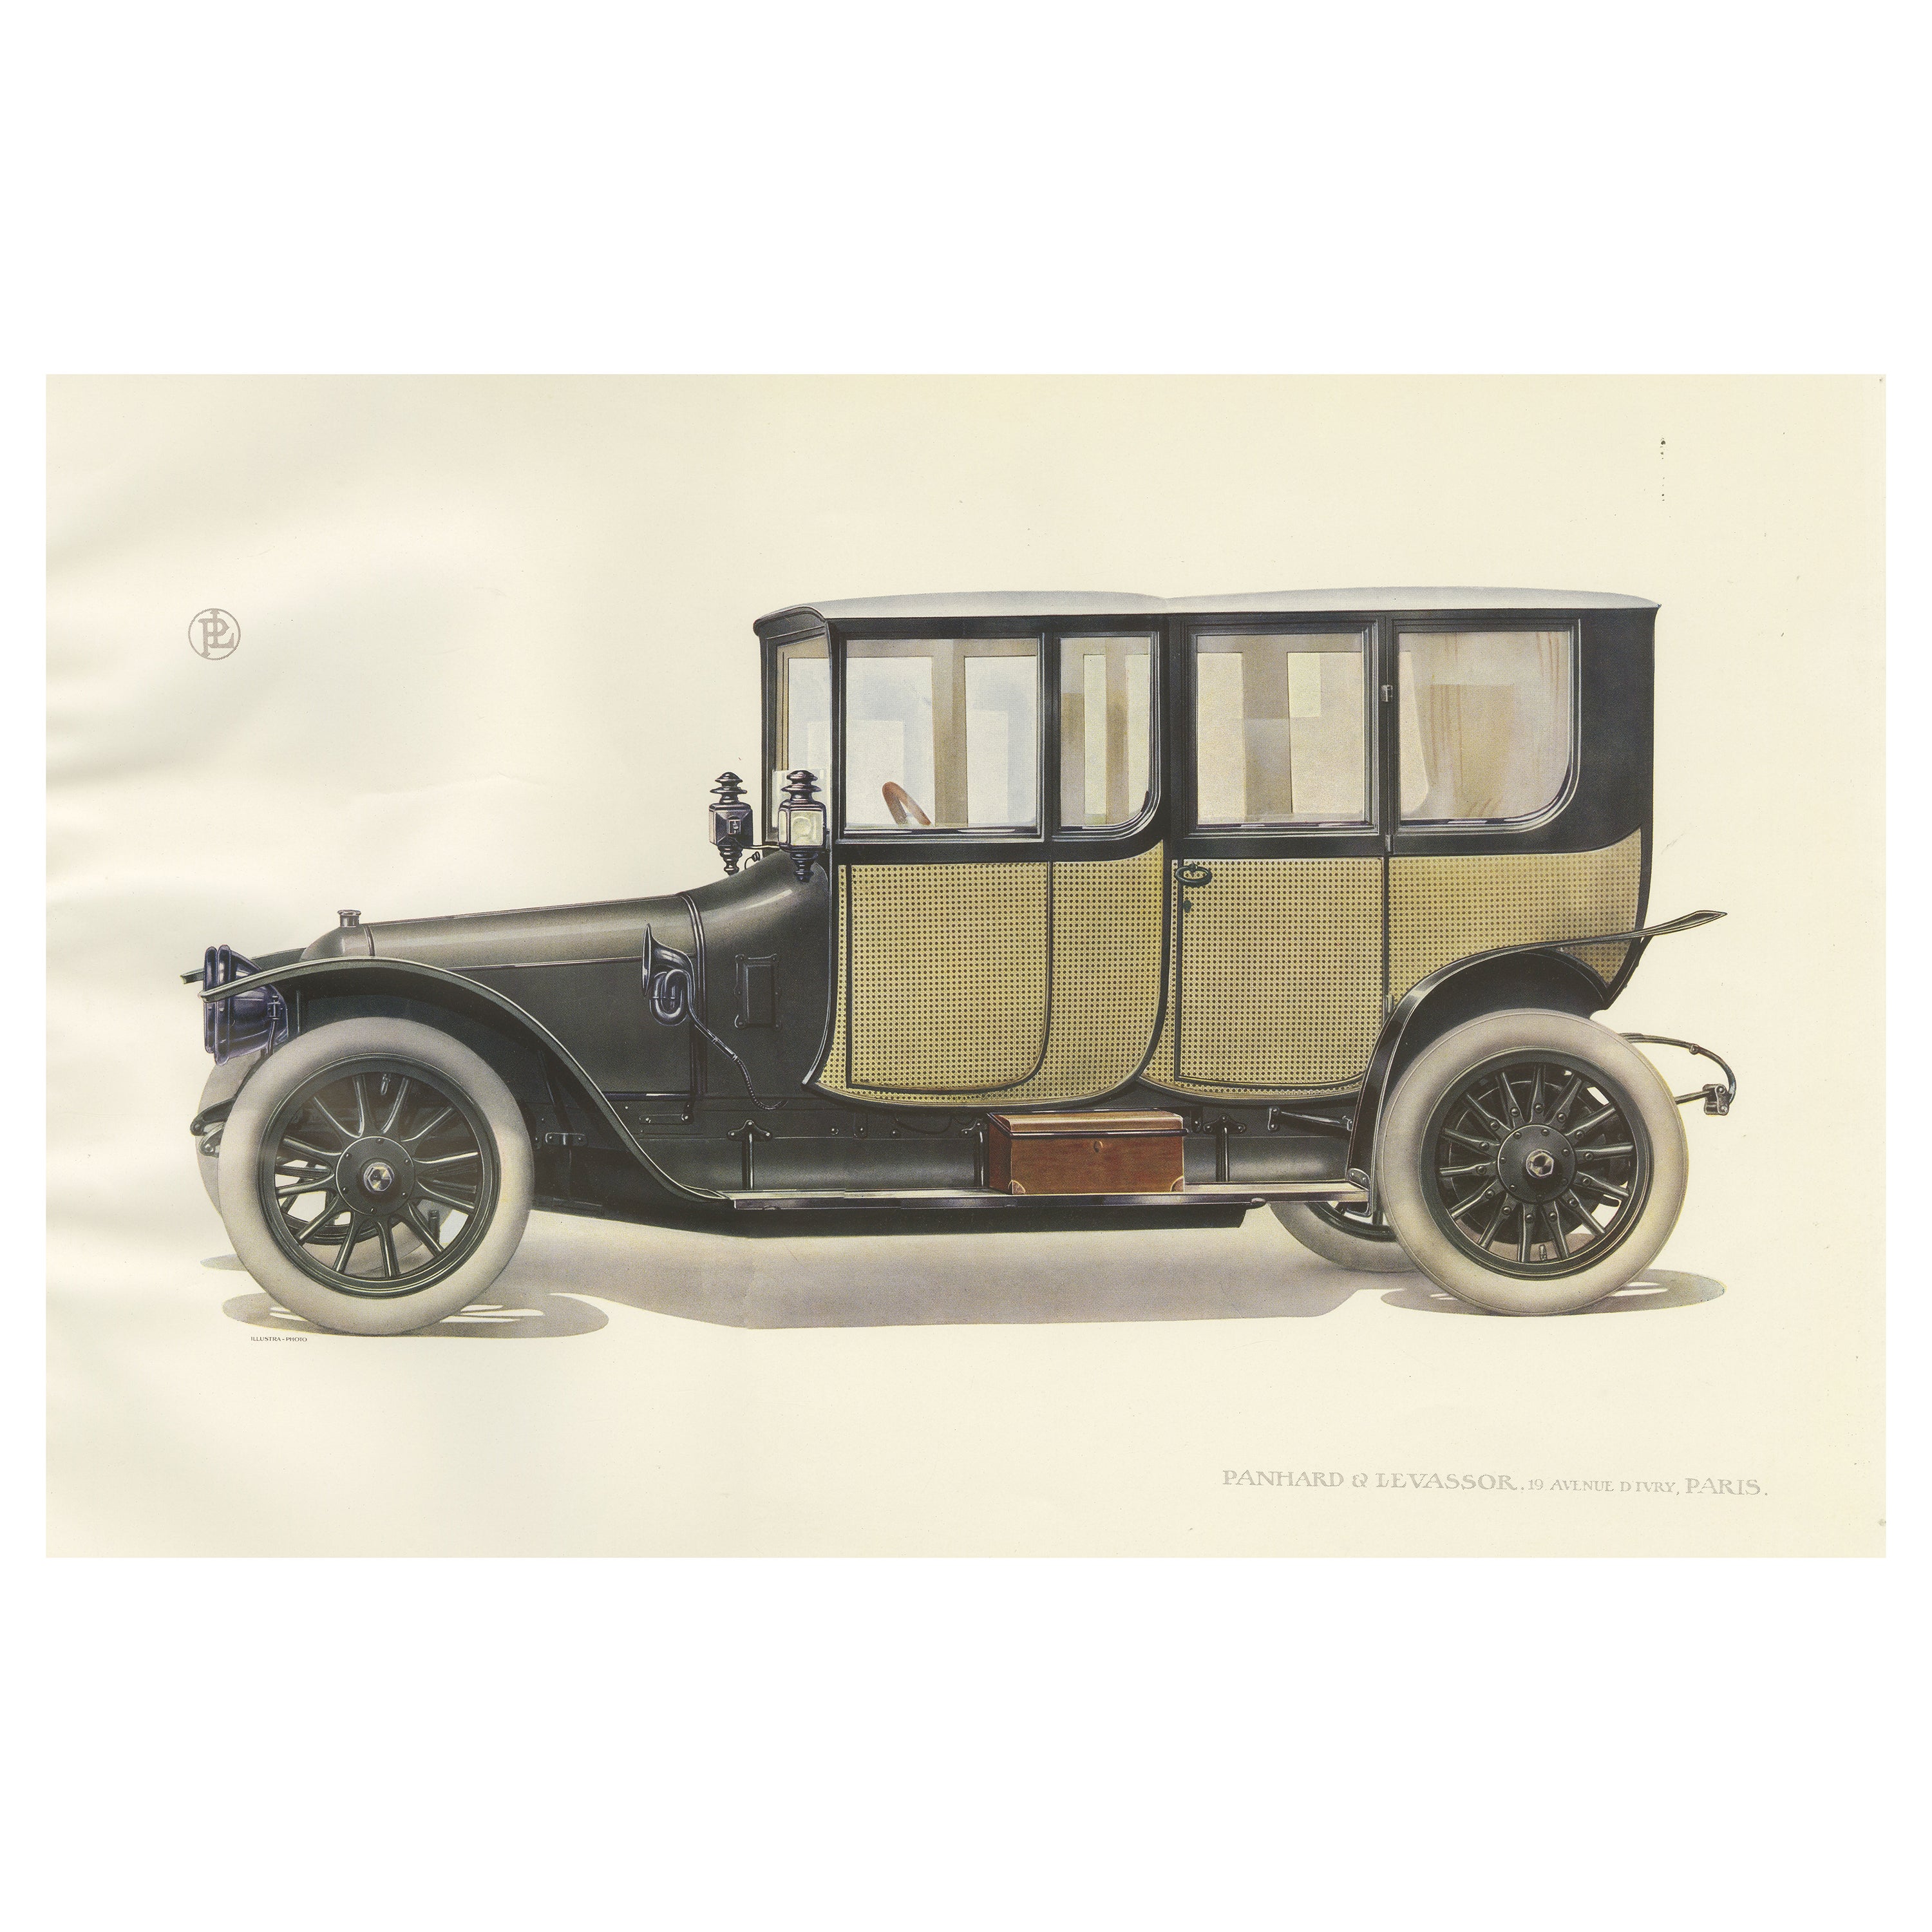 Antique Print of the Panhard et Levassor Double Coupe Conduite Car For Sale